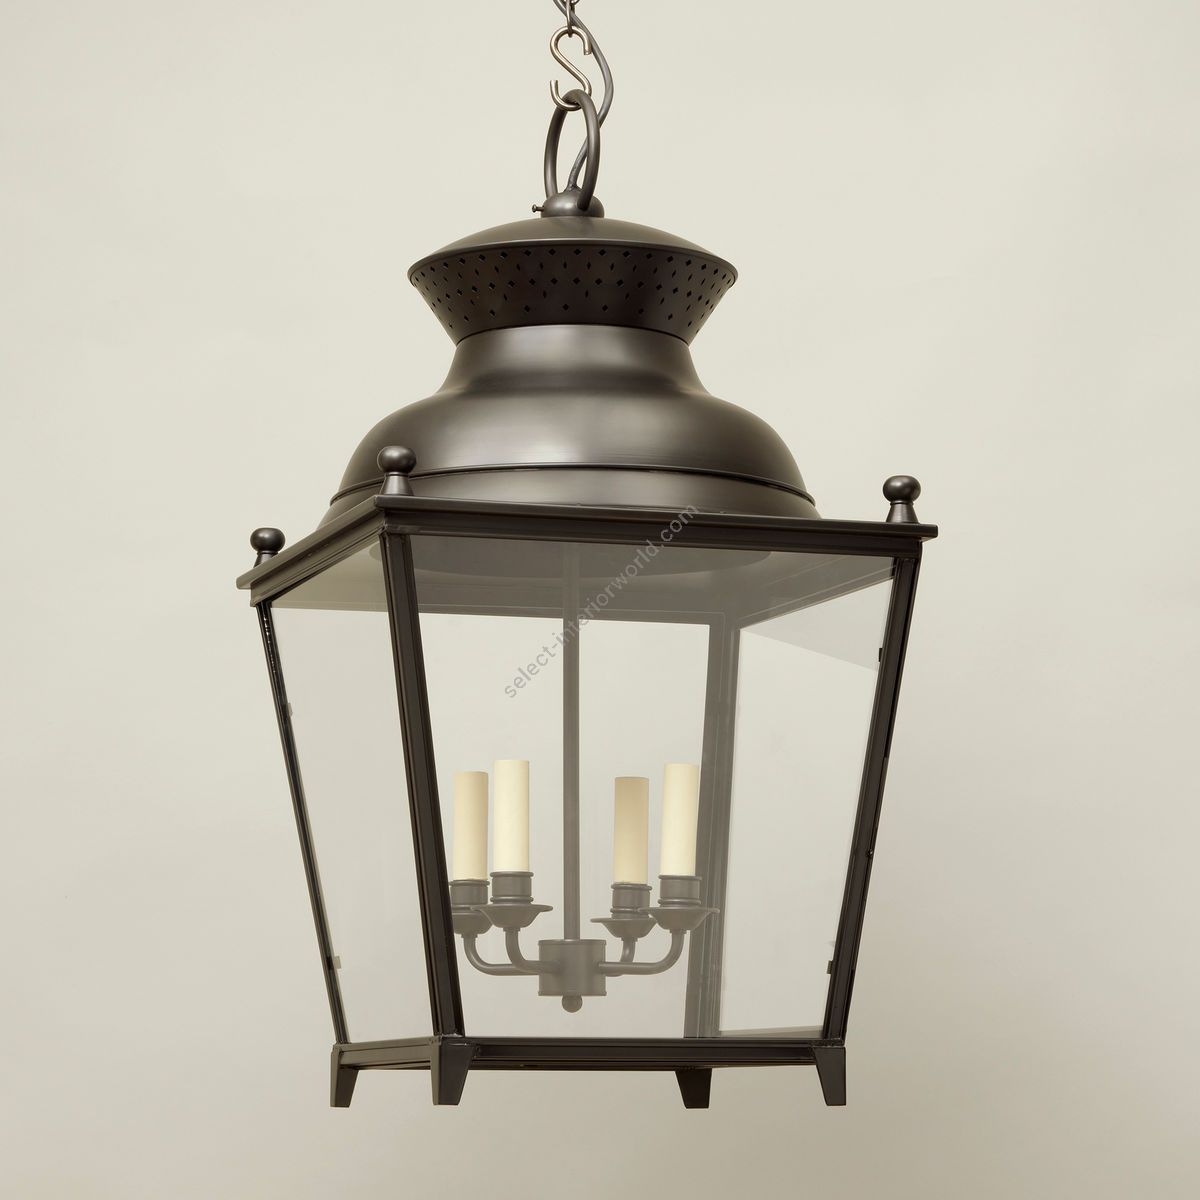 Vaughan / Bronze Lantern / French Chateau CL0251.BZ, CL0151.BZ